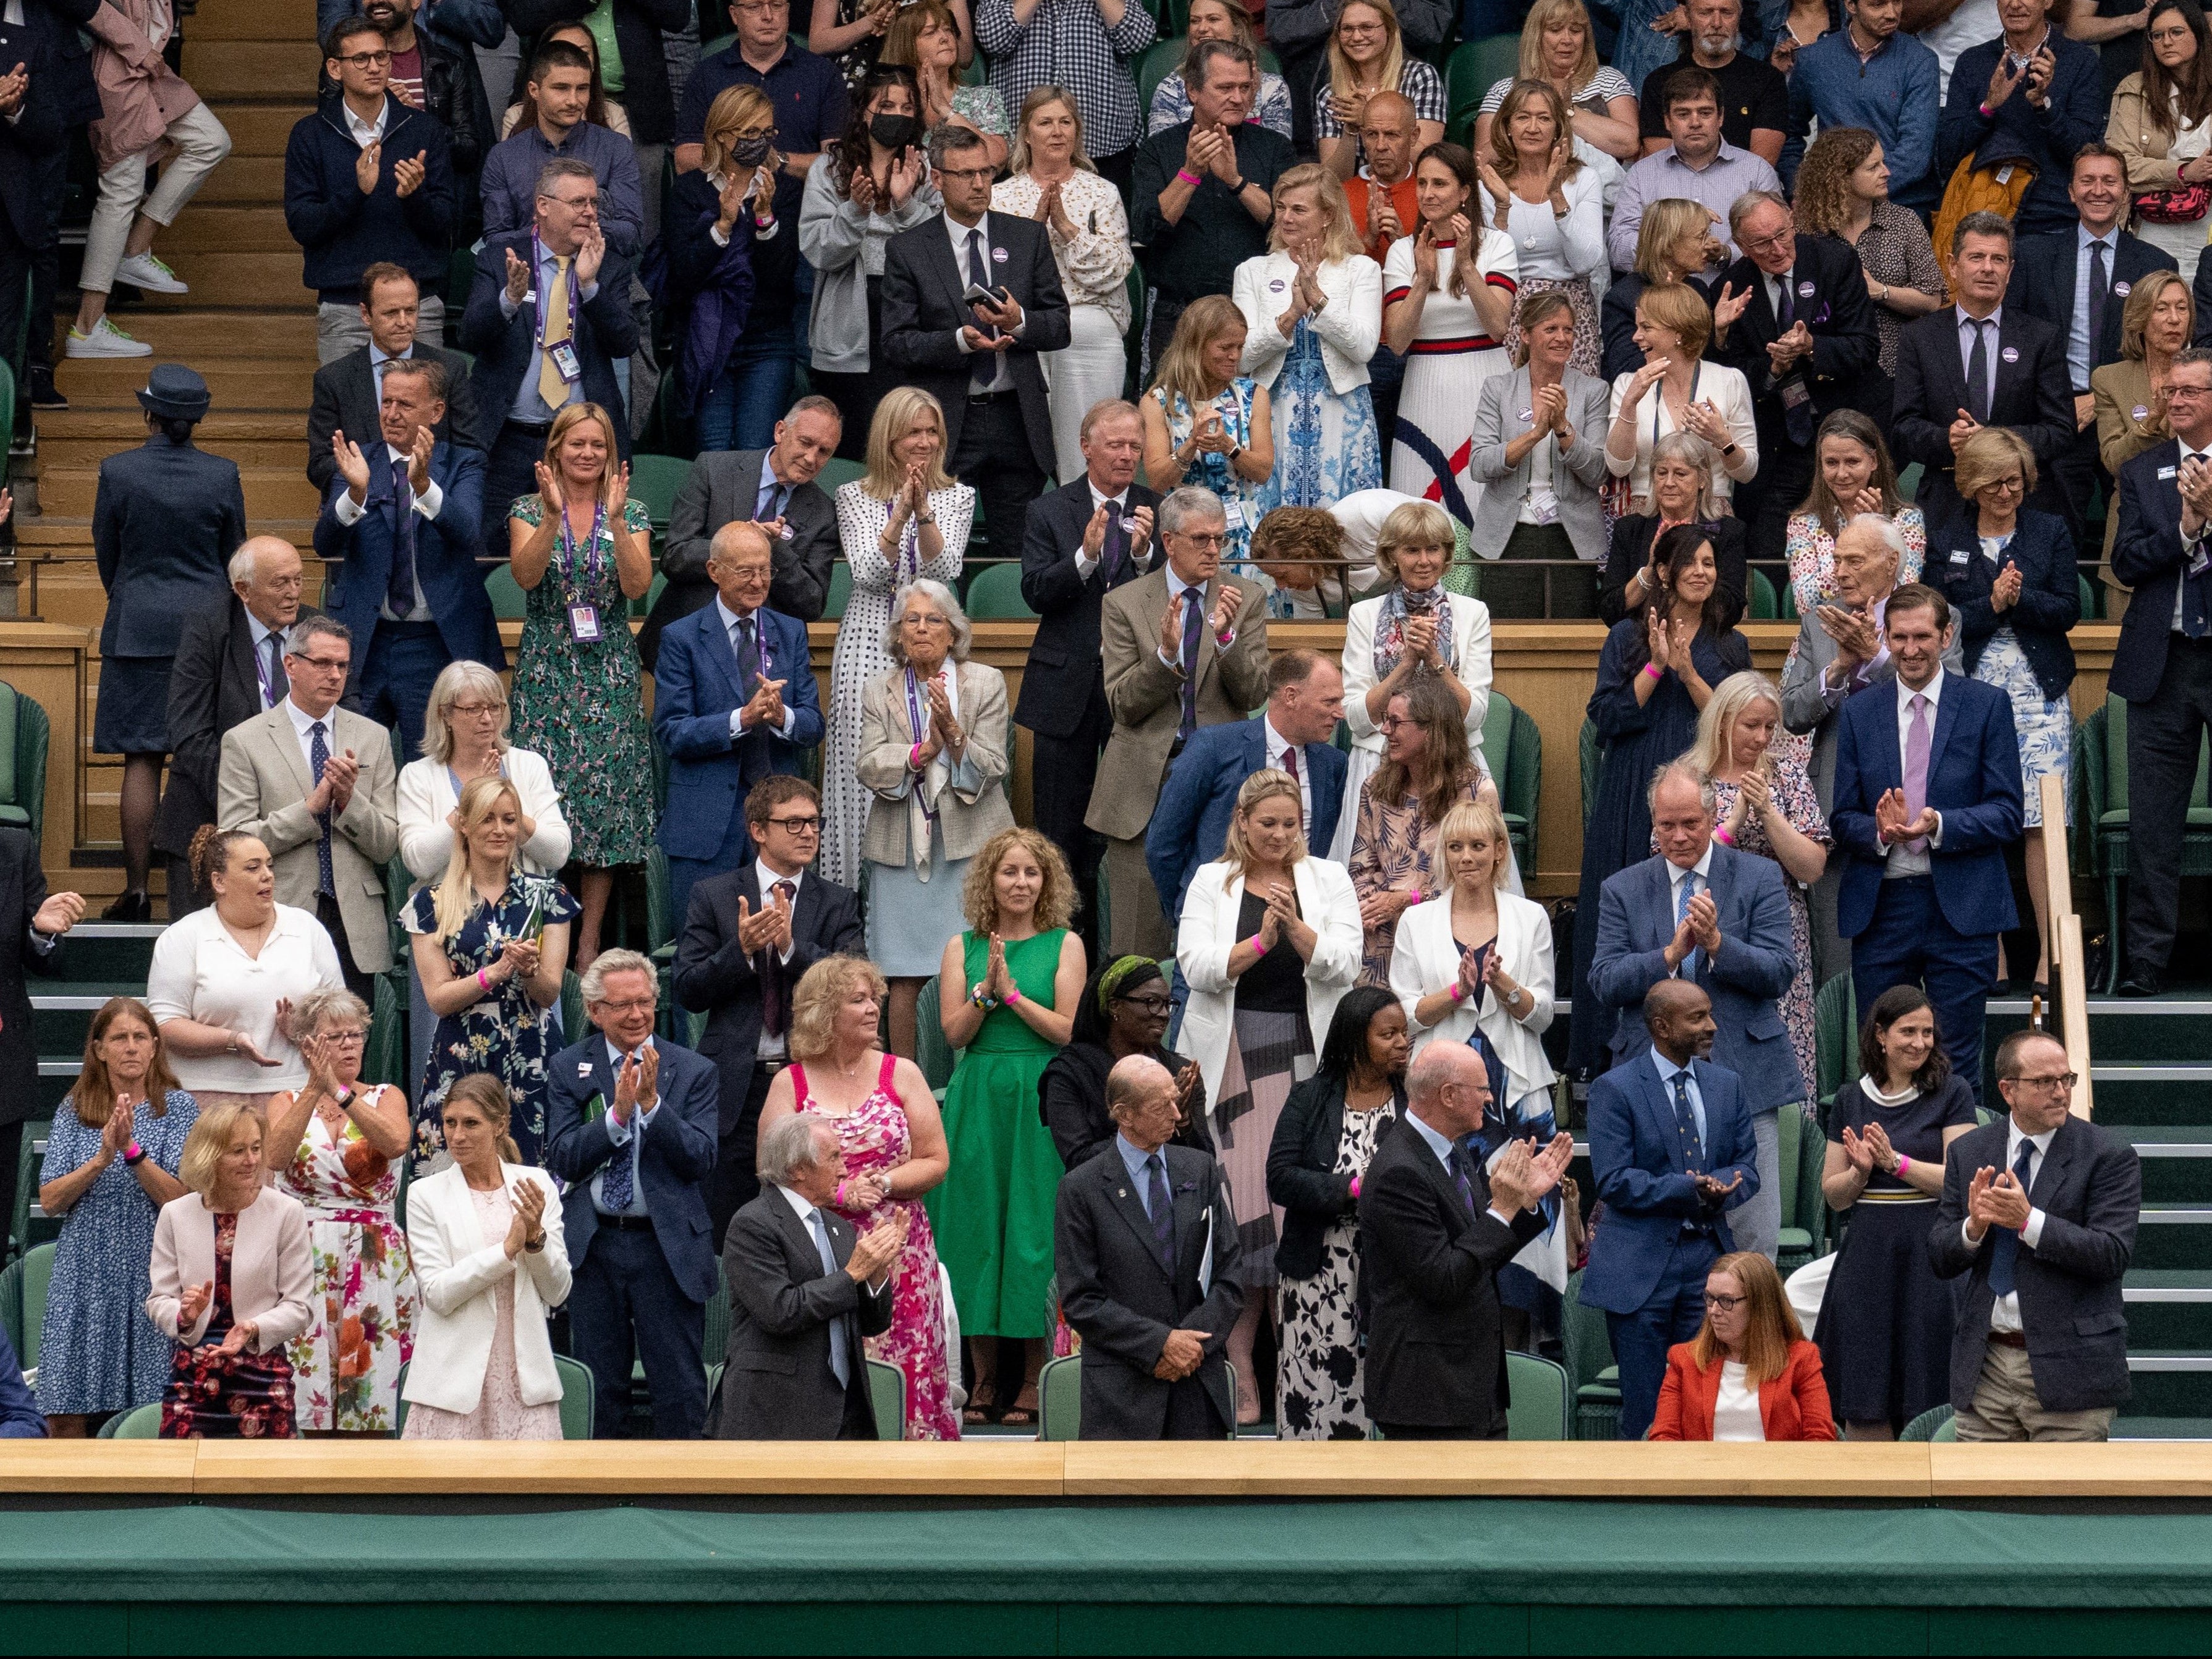 The Royal Box on 28 June at the 2021 Wimbledon Championships